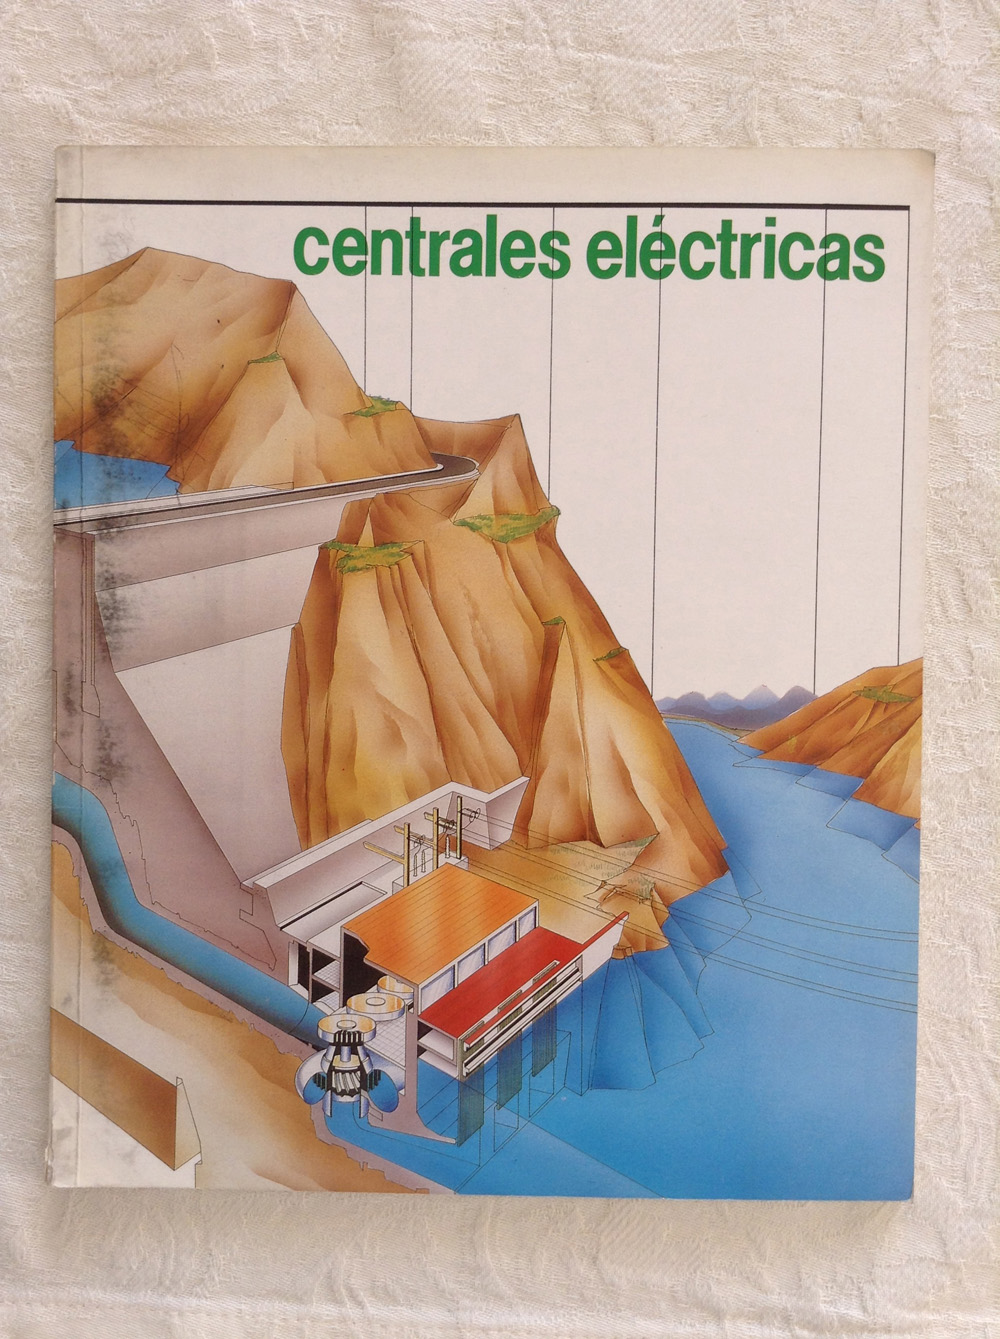 Centrales eléctricas